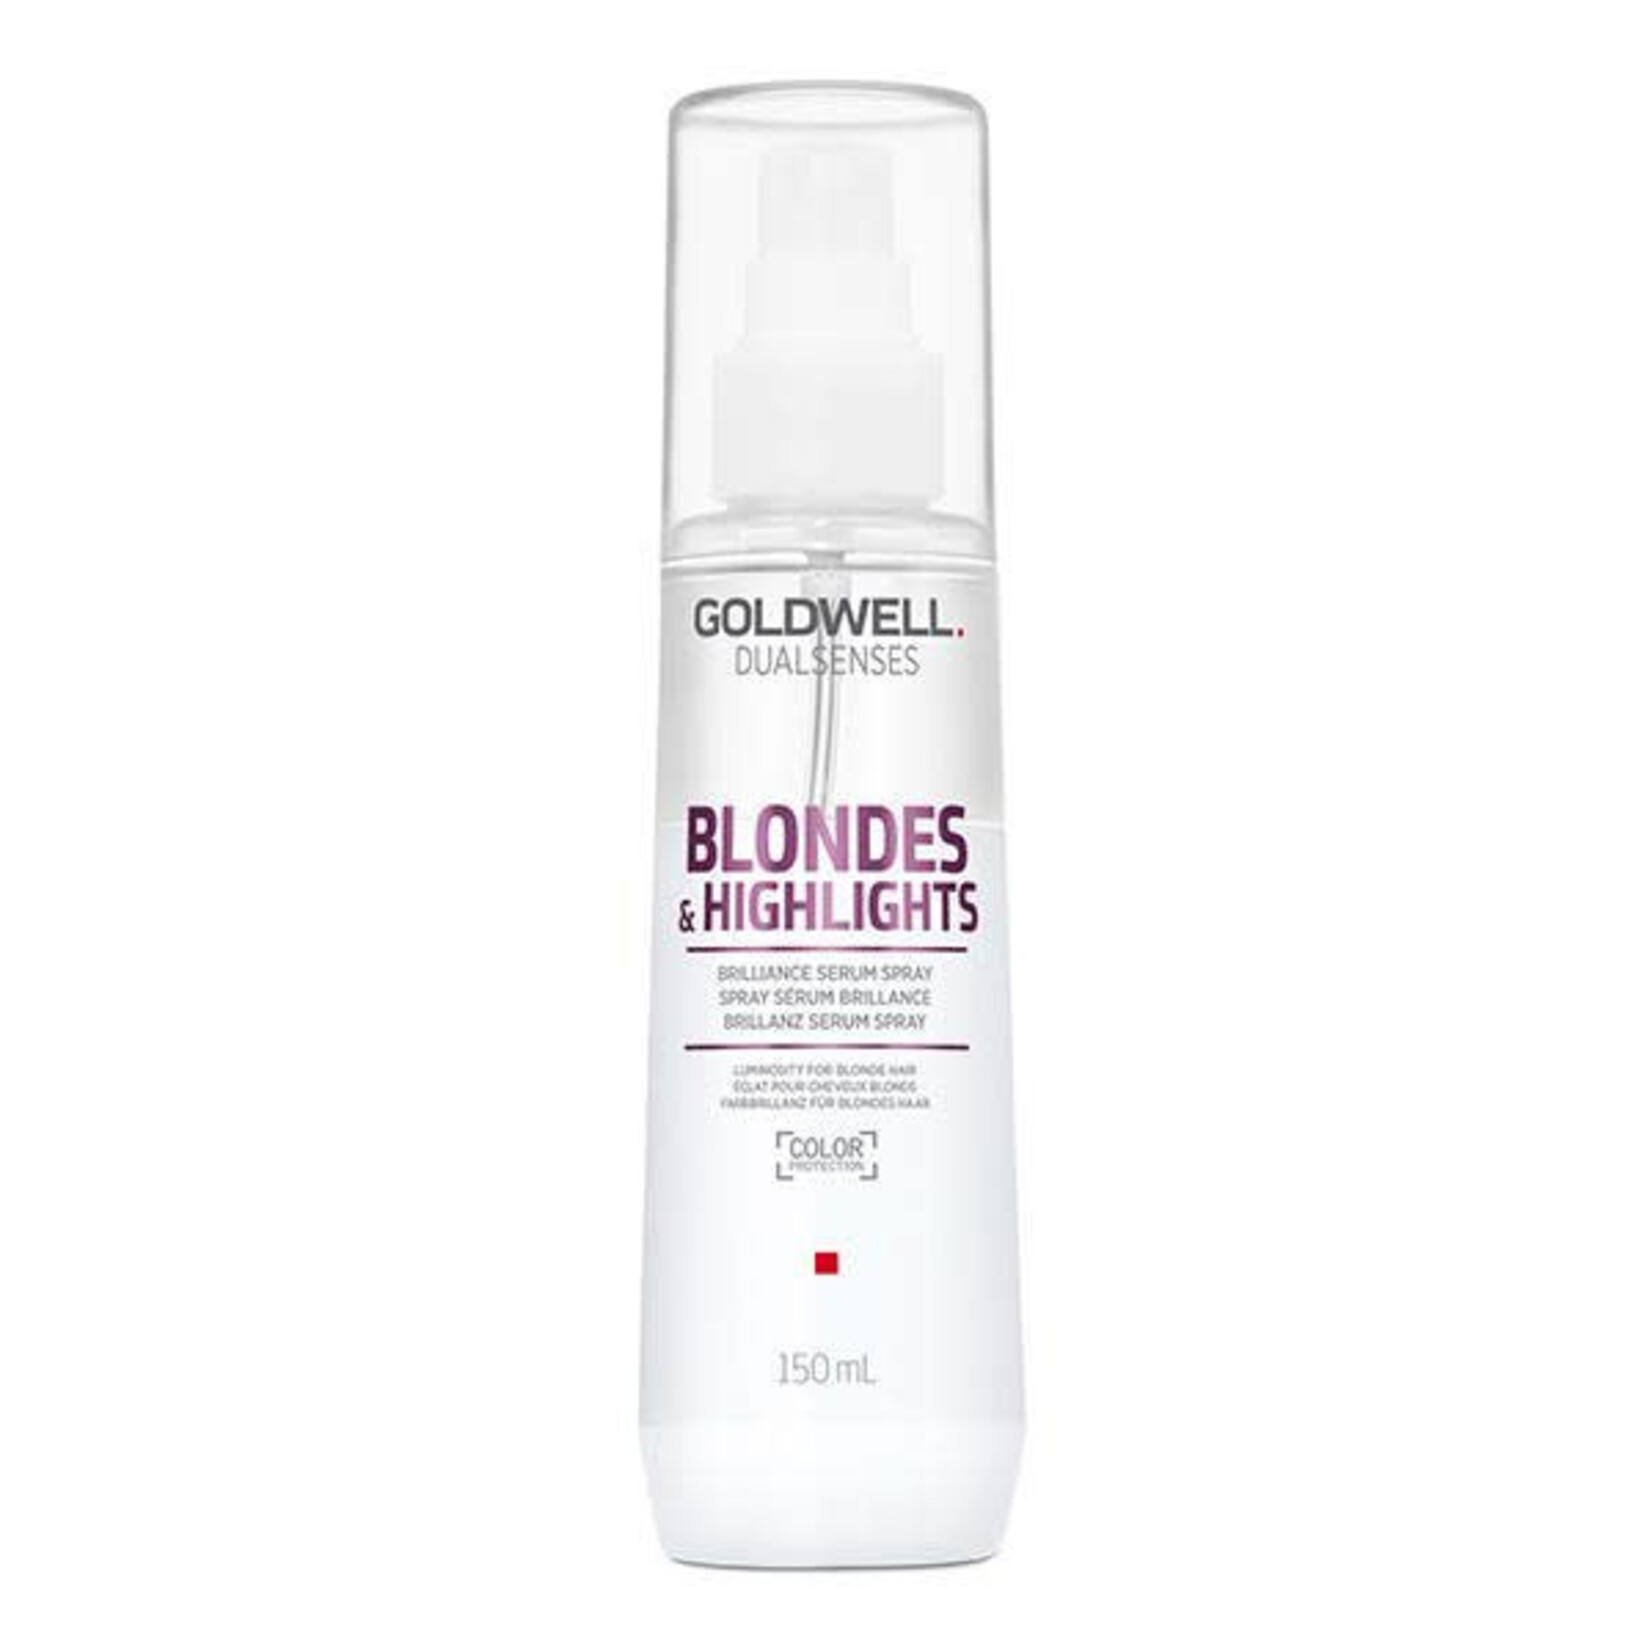 Goldwell Goldwell - Dualsenses - Blondes & Highlights - Brillance Serum Spray 150ml